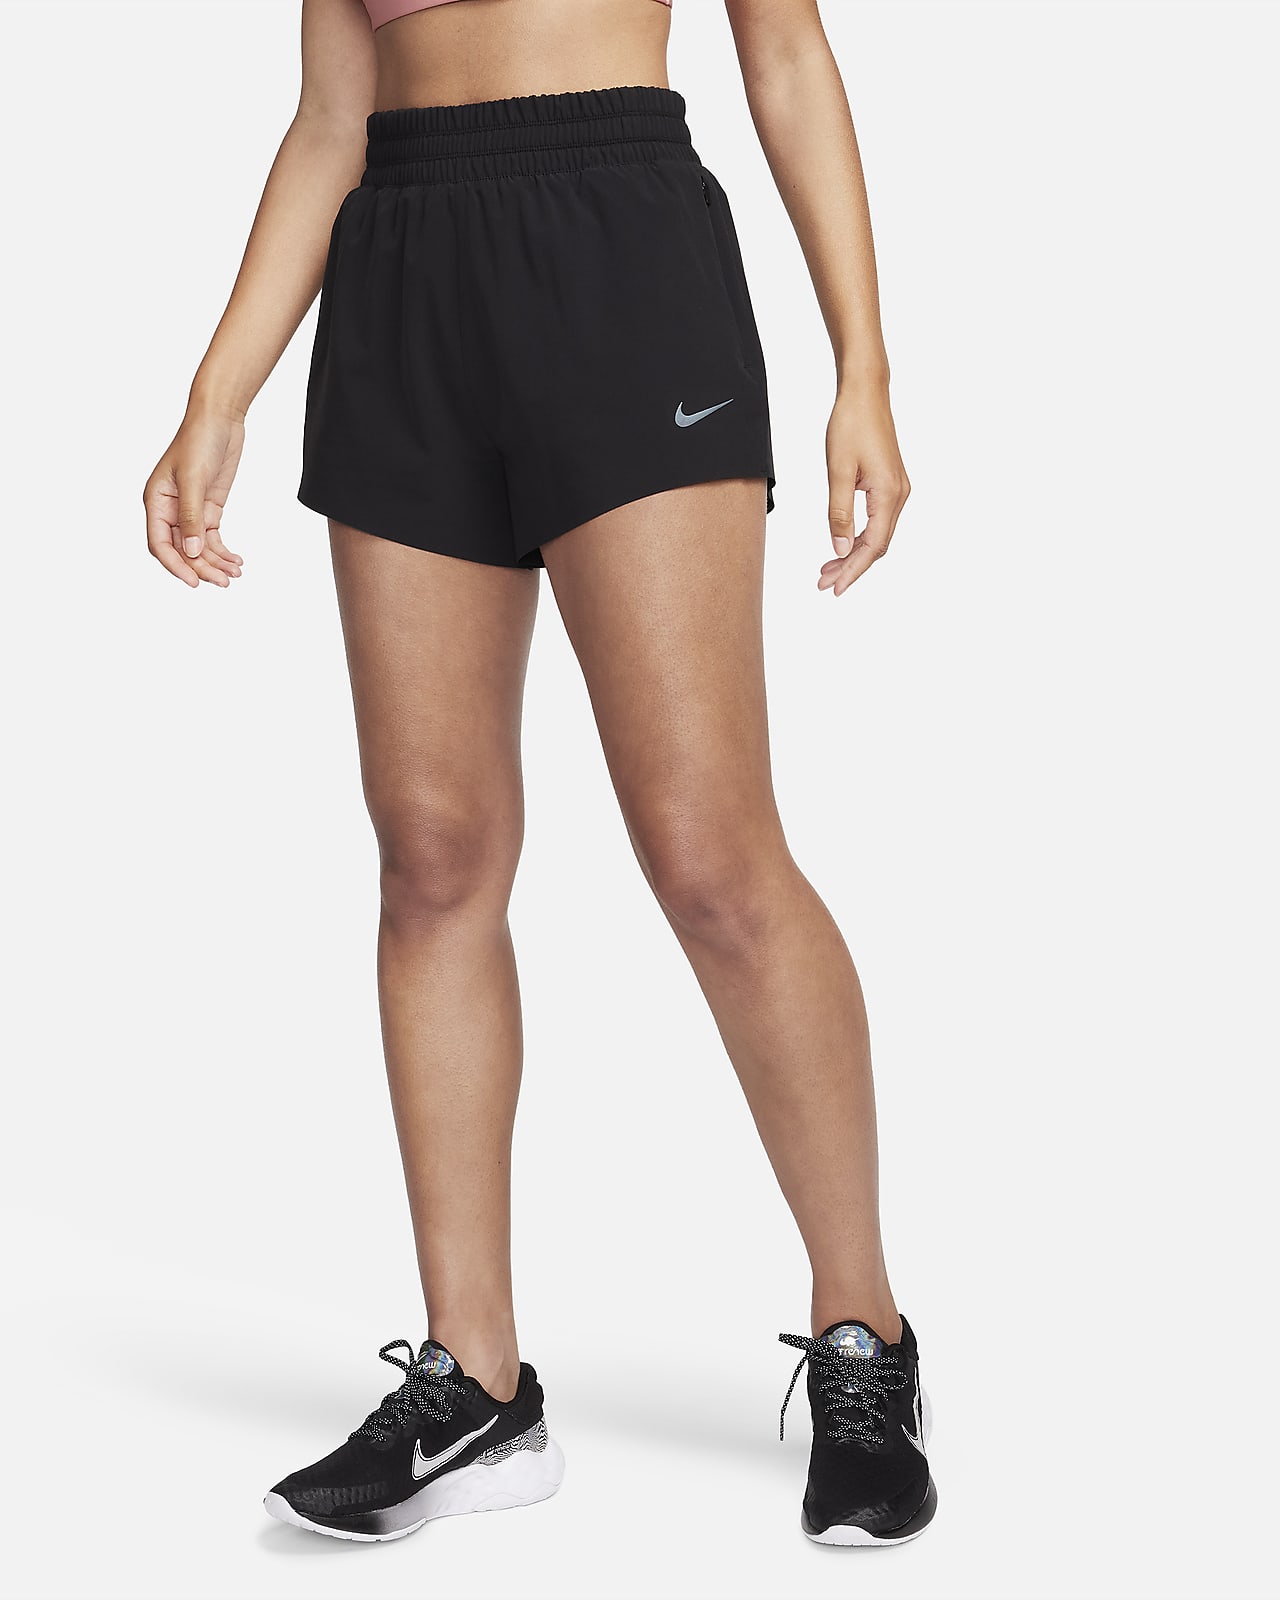 Nike Dri-FIT Running Division hardloopshorts met binnenbroekje, hoge taille en zakken voor dames (8 cm)